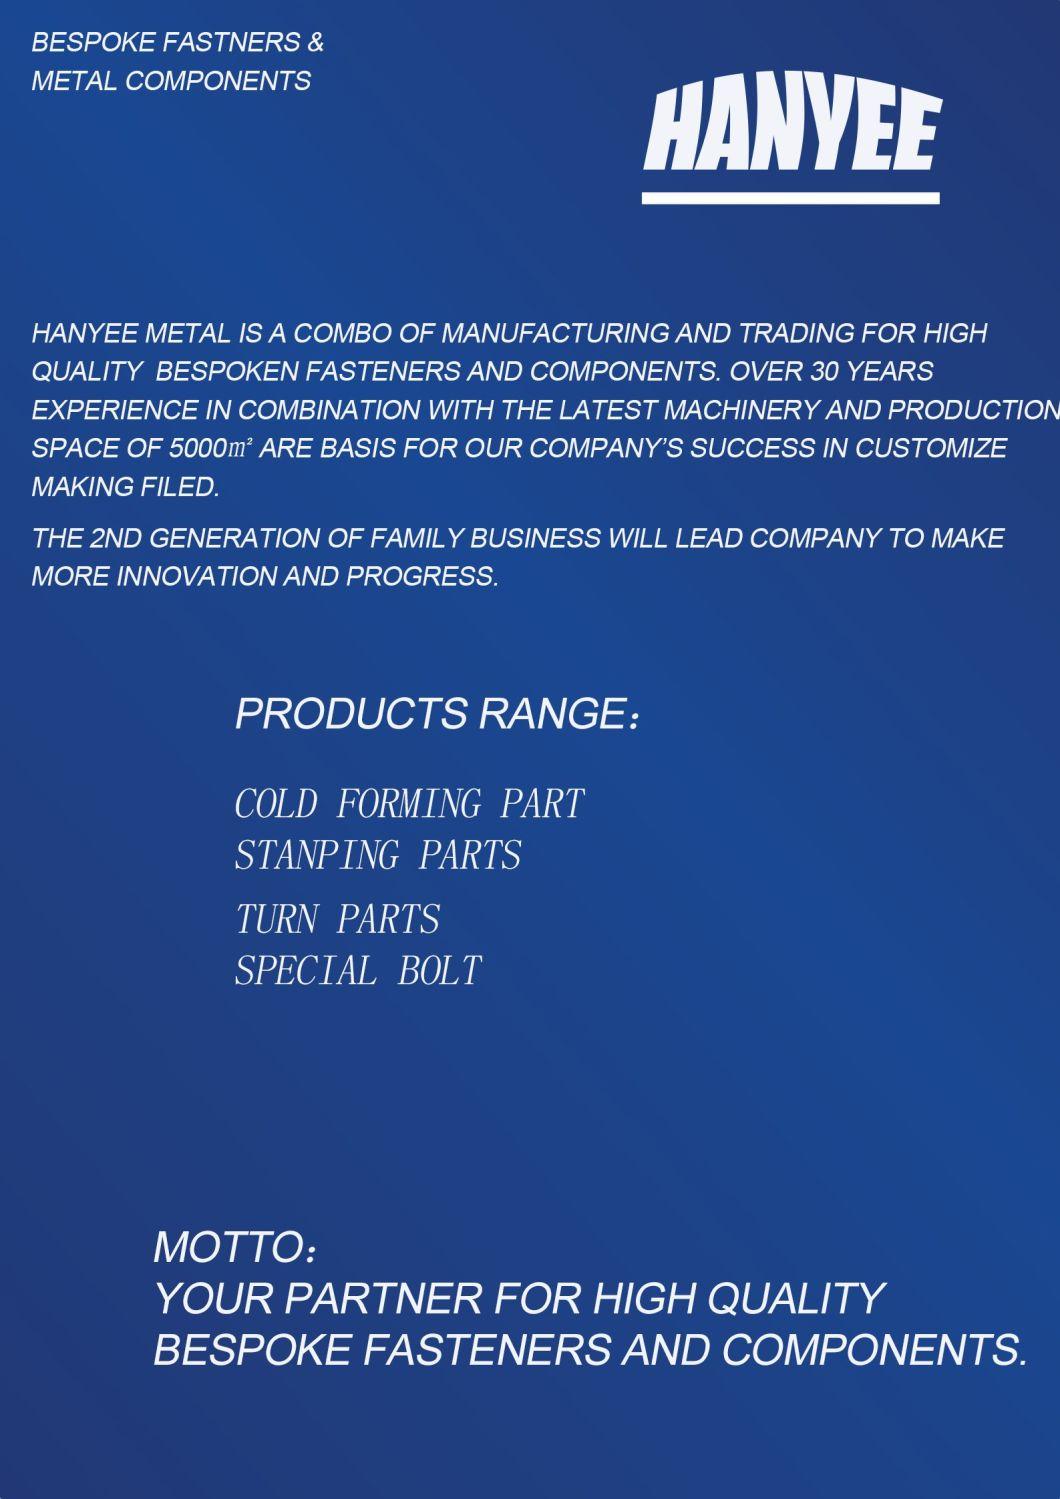 ISO 9001: 2015 Certification Advanced Equipment Factory Direct Sale Custom-Made Rivet